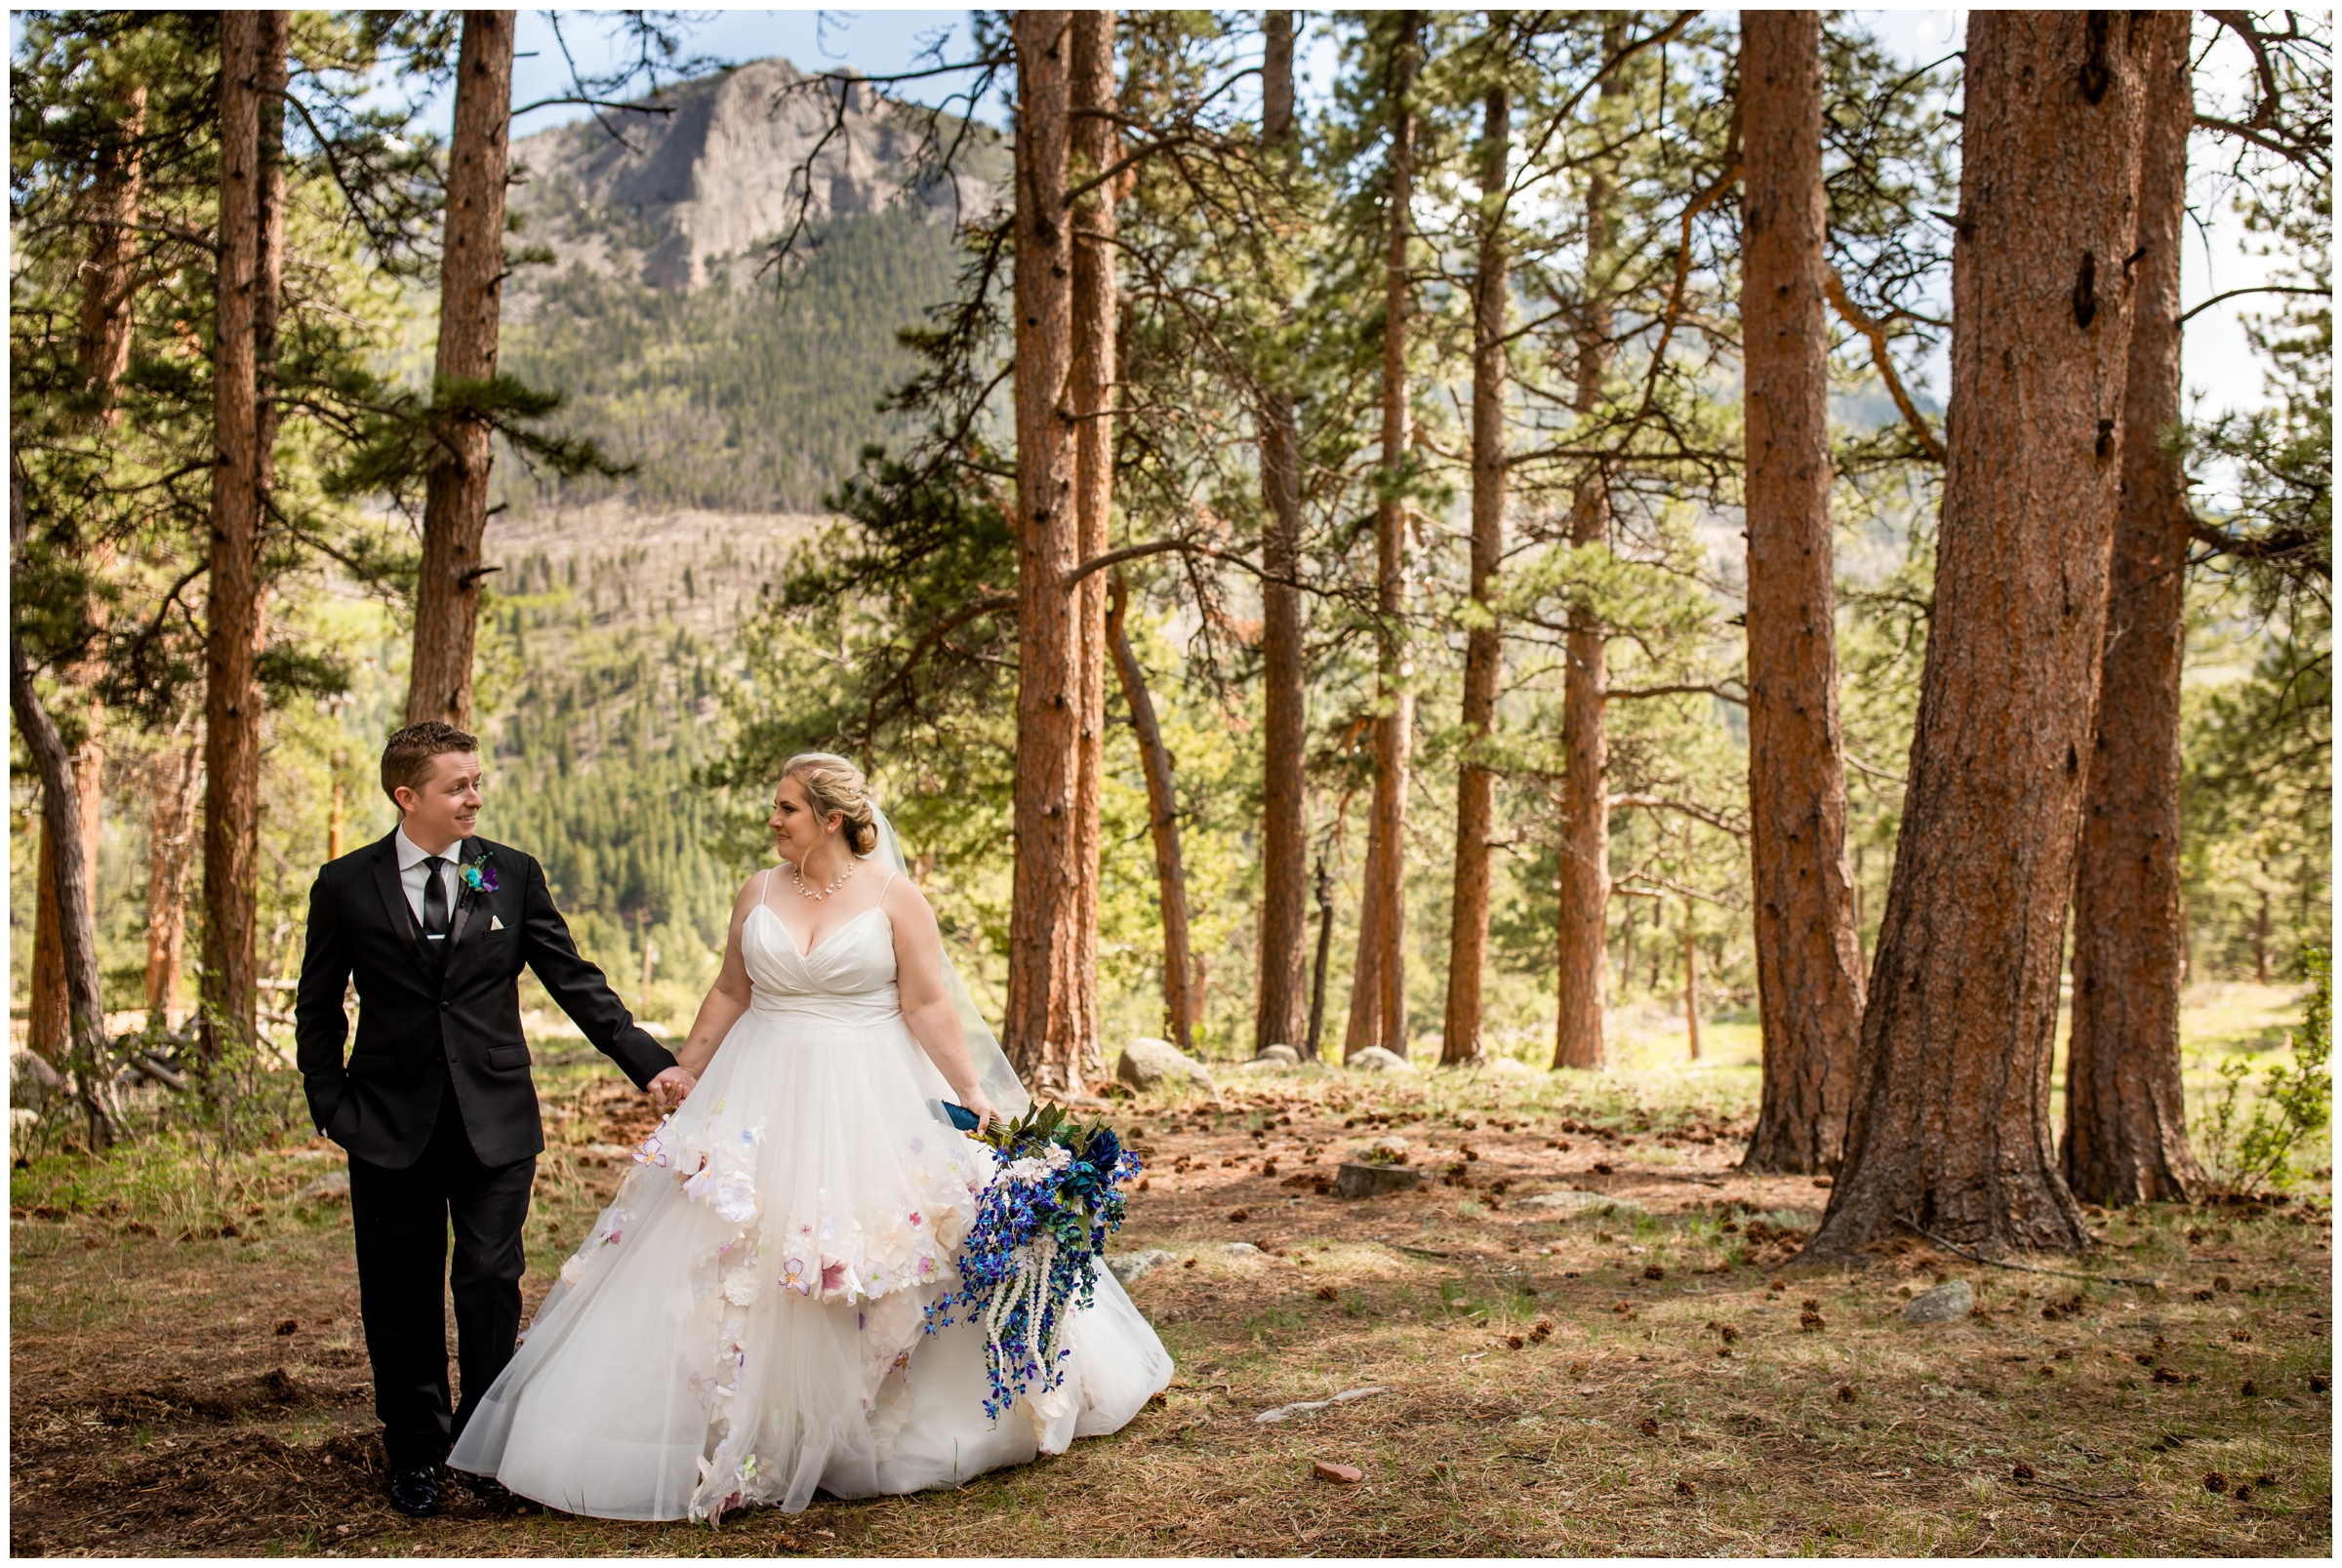 Della Terra wedding photography during late spring by Estes Park Colorado photographer Plum Pretty Photography